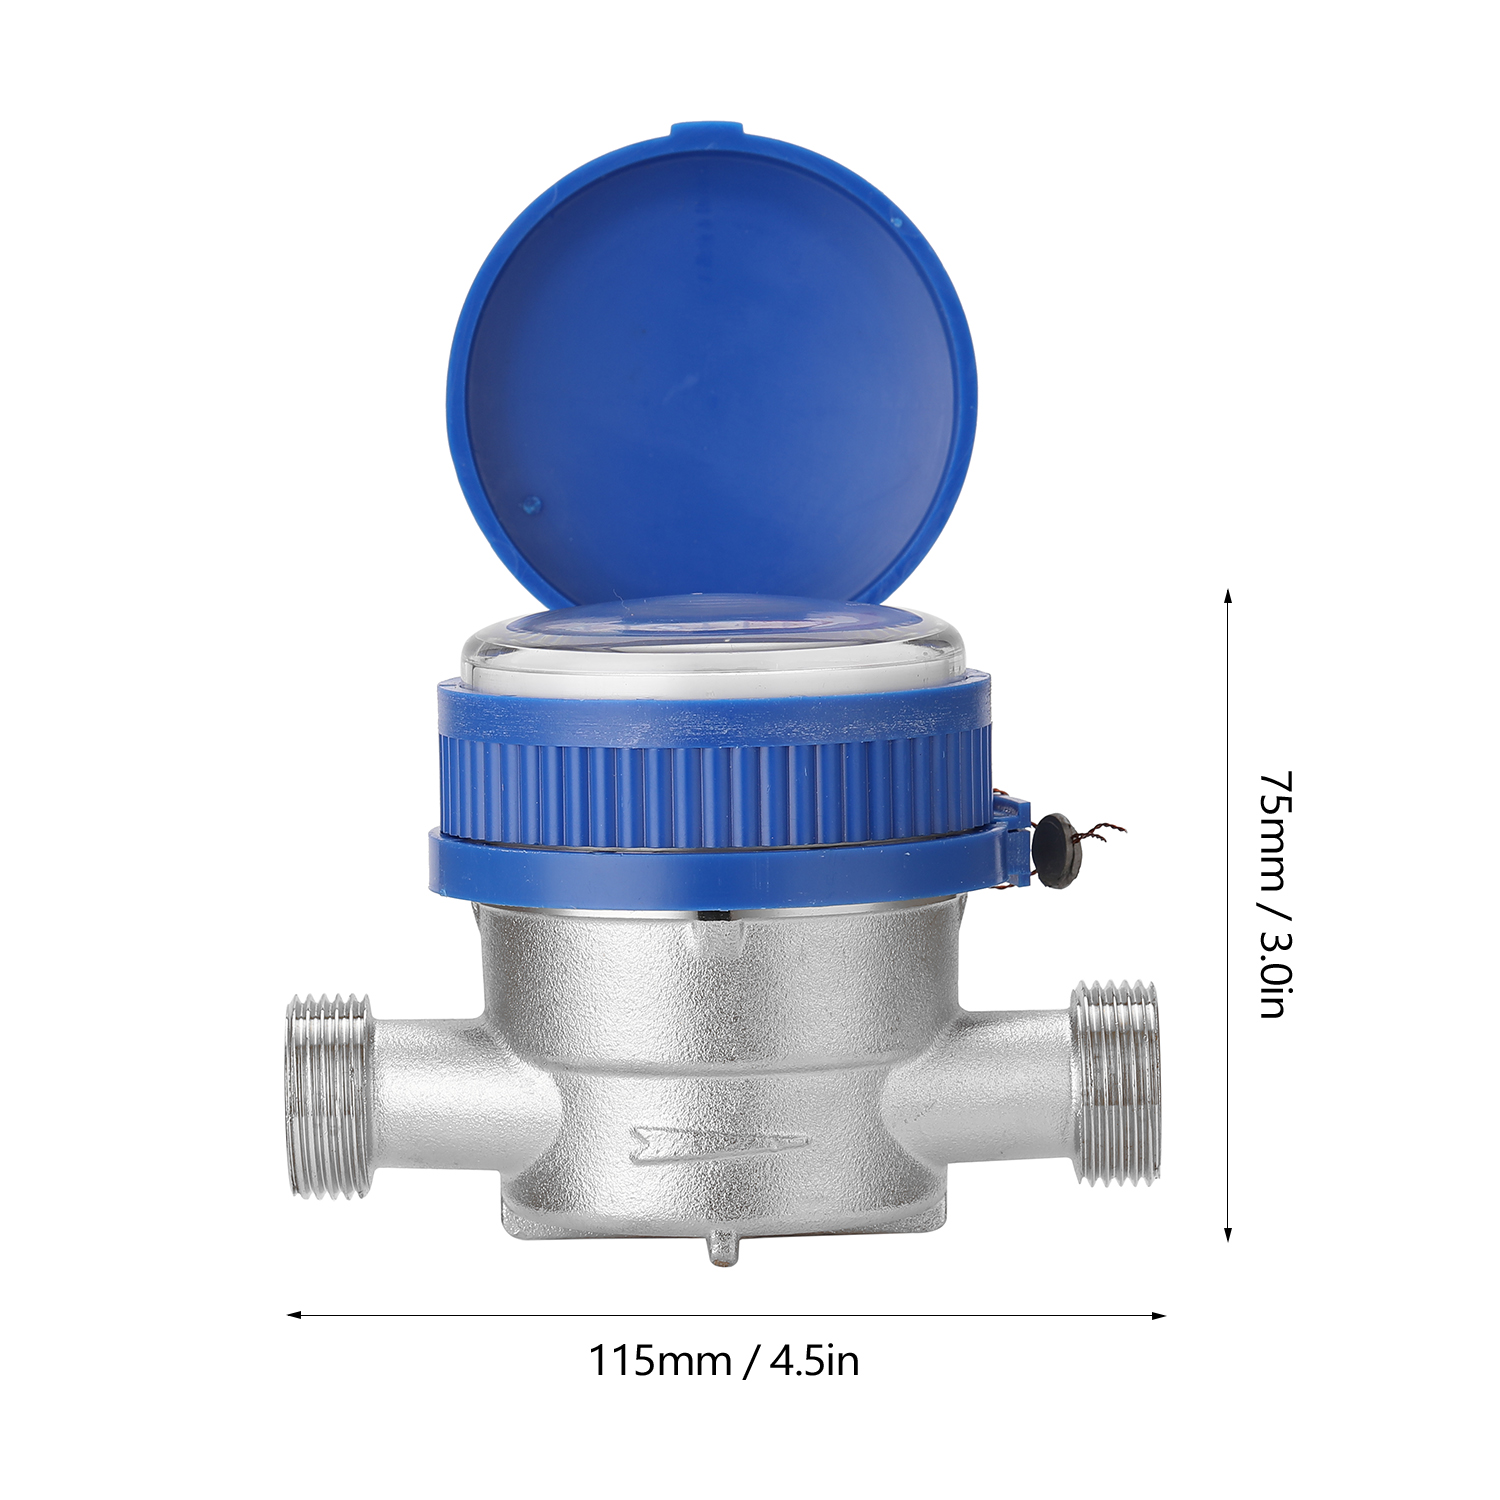 15mm 1/2 " intelligent vandmåler husstand mekanisk rotor type vandmåler pointer digital display kombination vandmålere